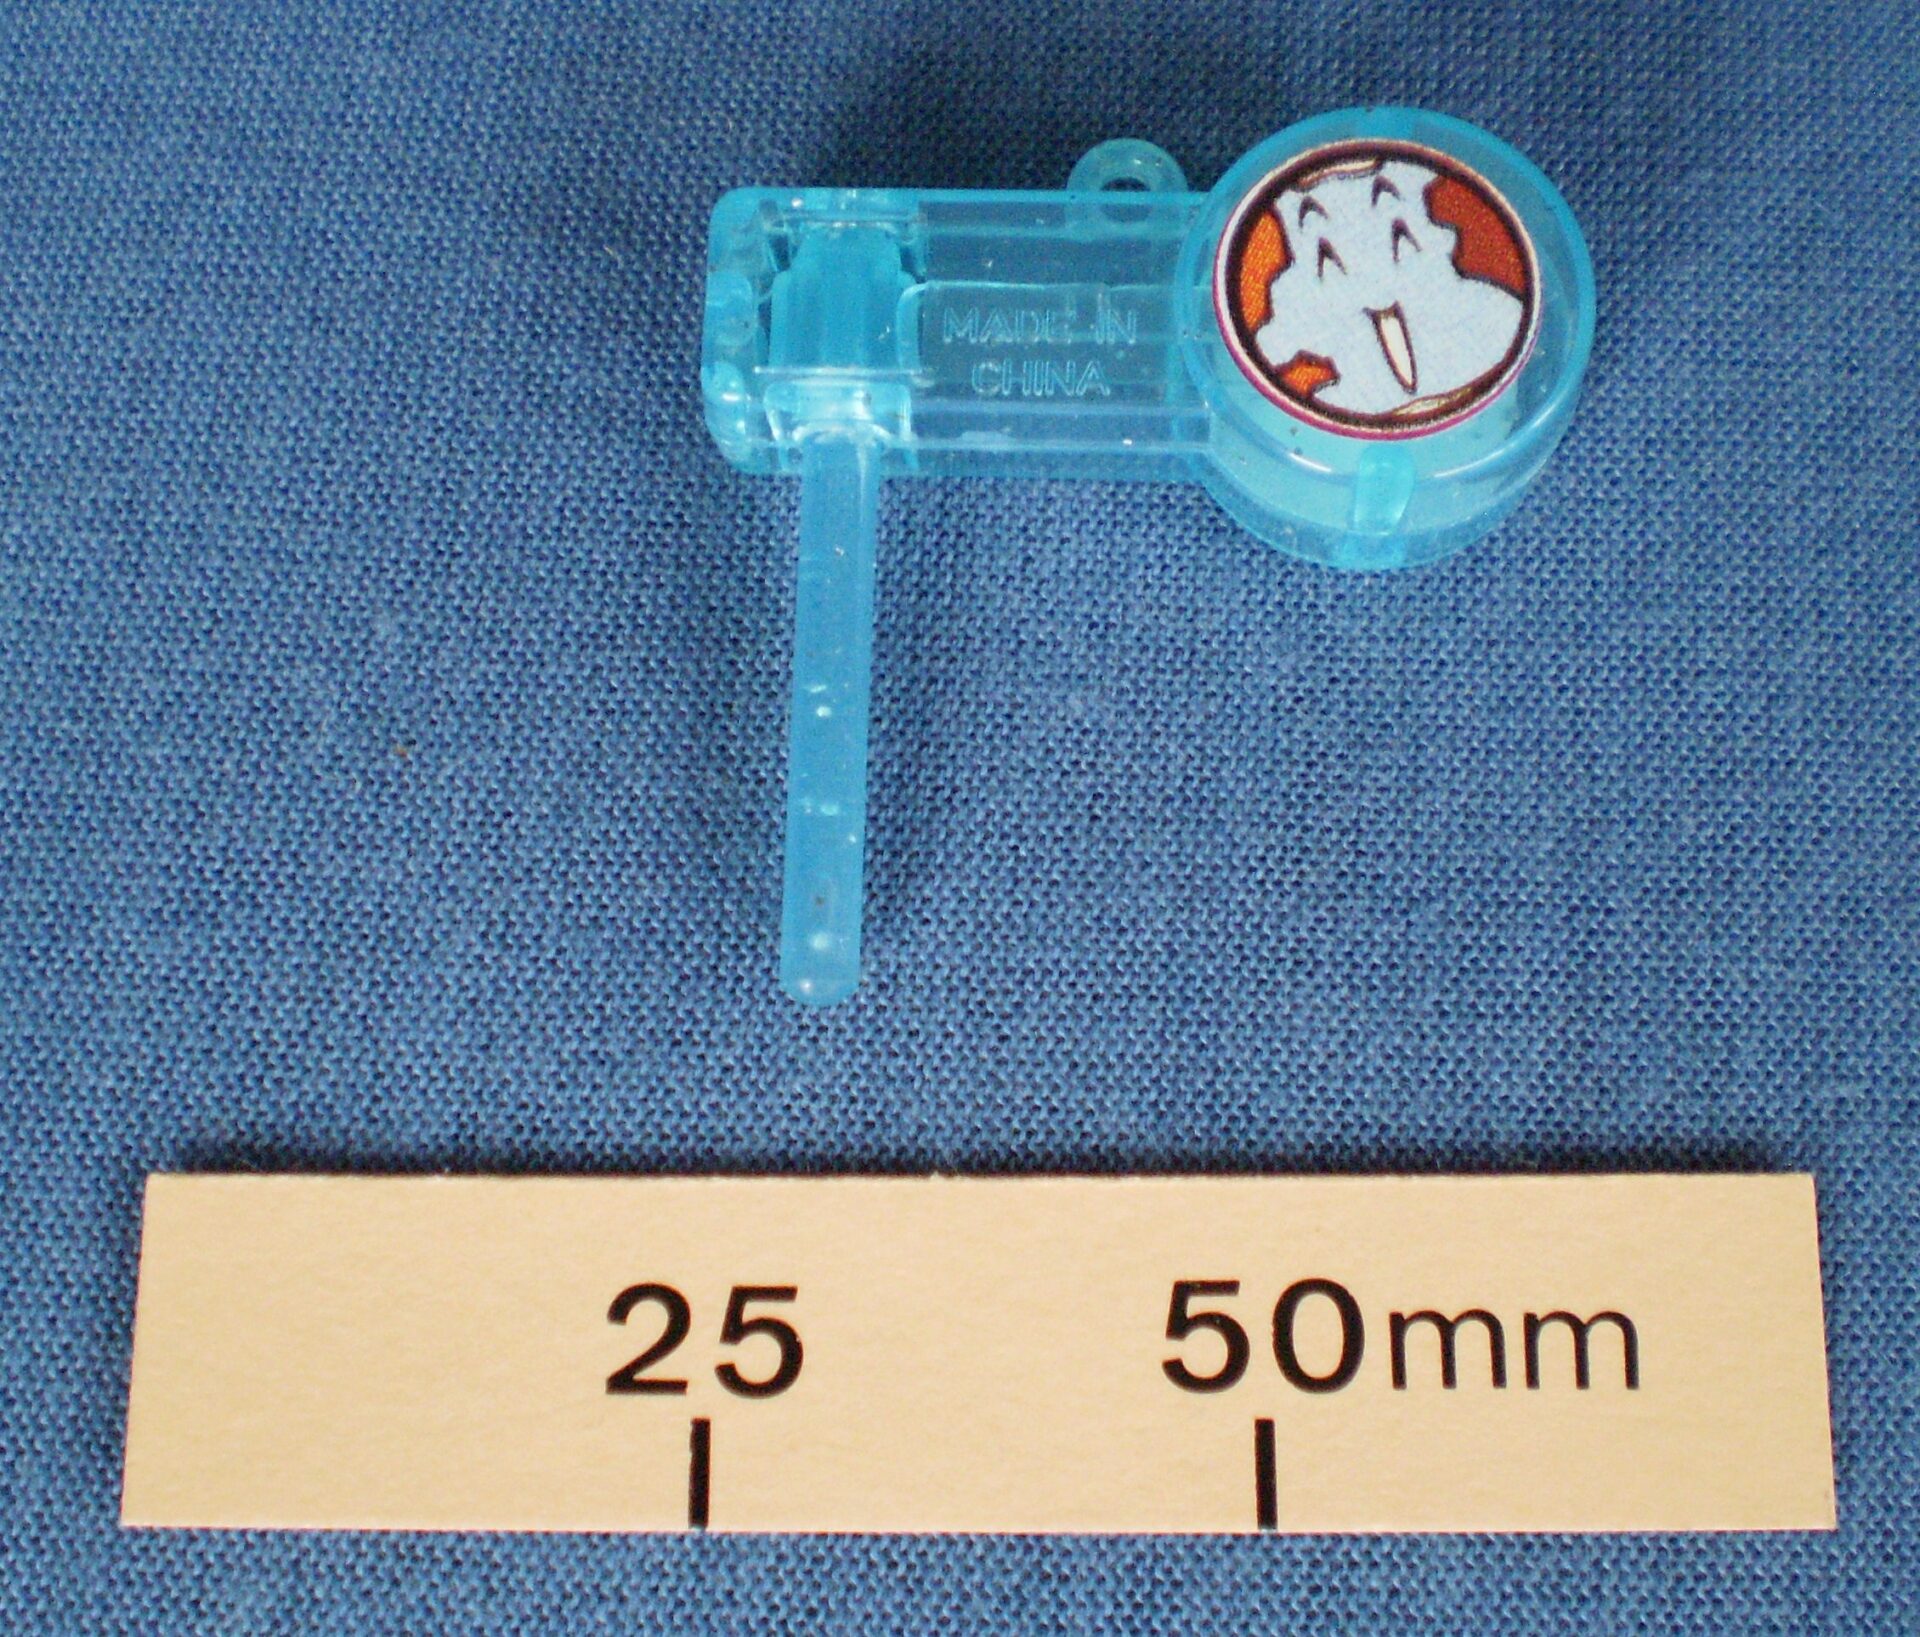 Small plastic rattle noise maker